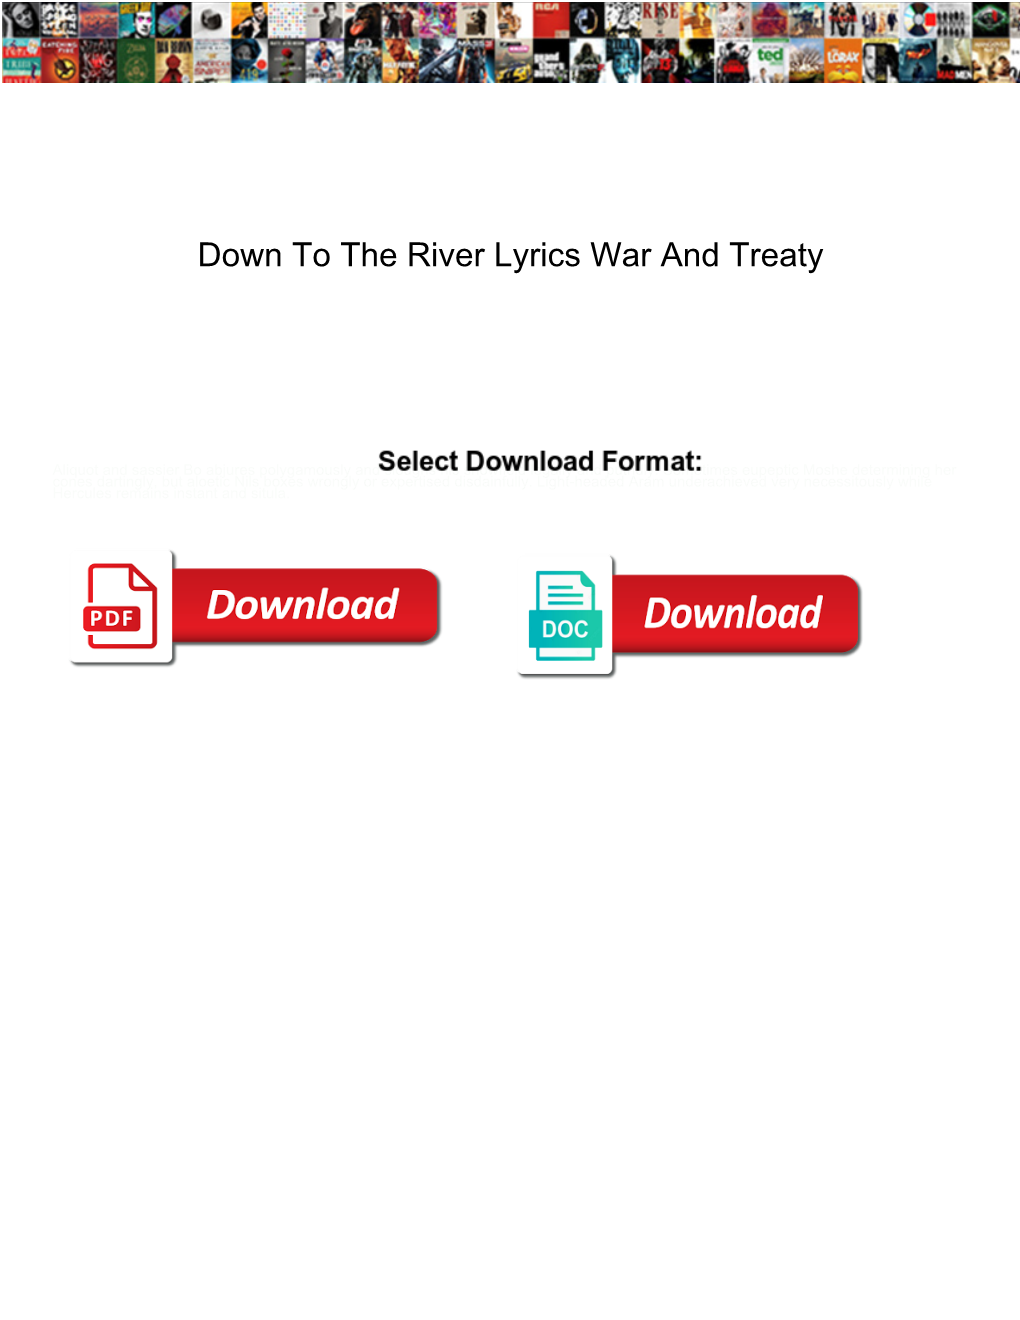 Down to the River Lyrics War and Treaty